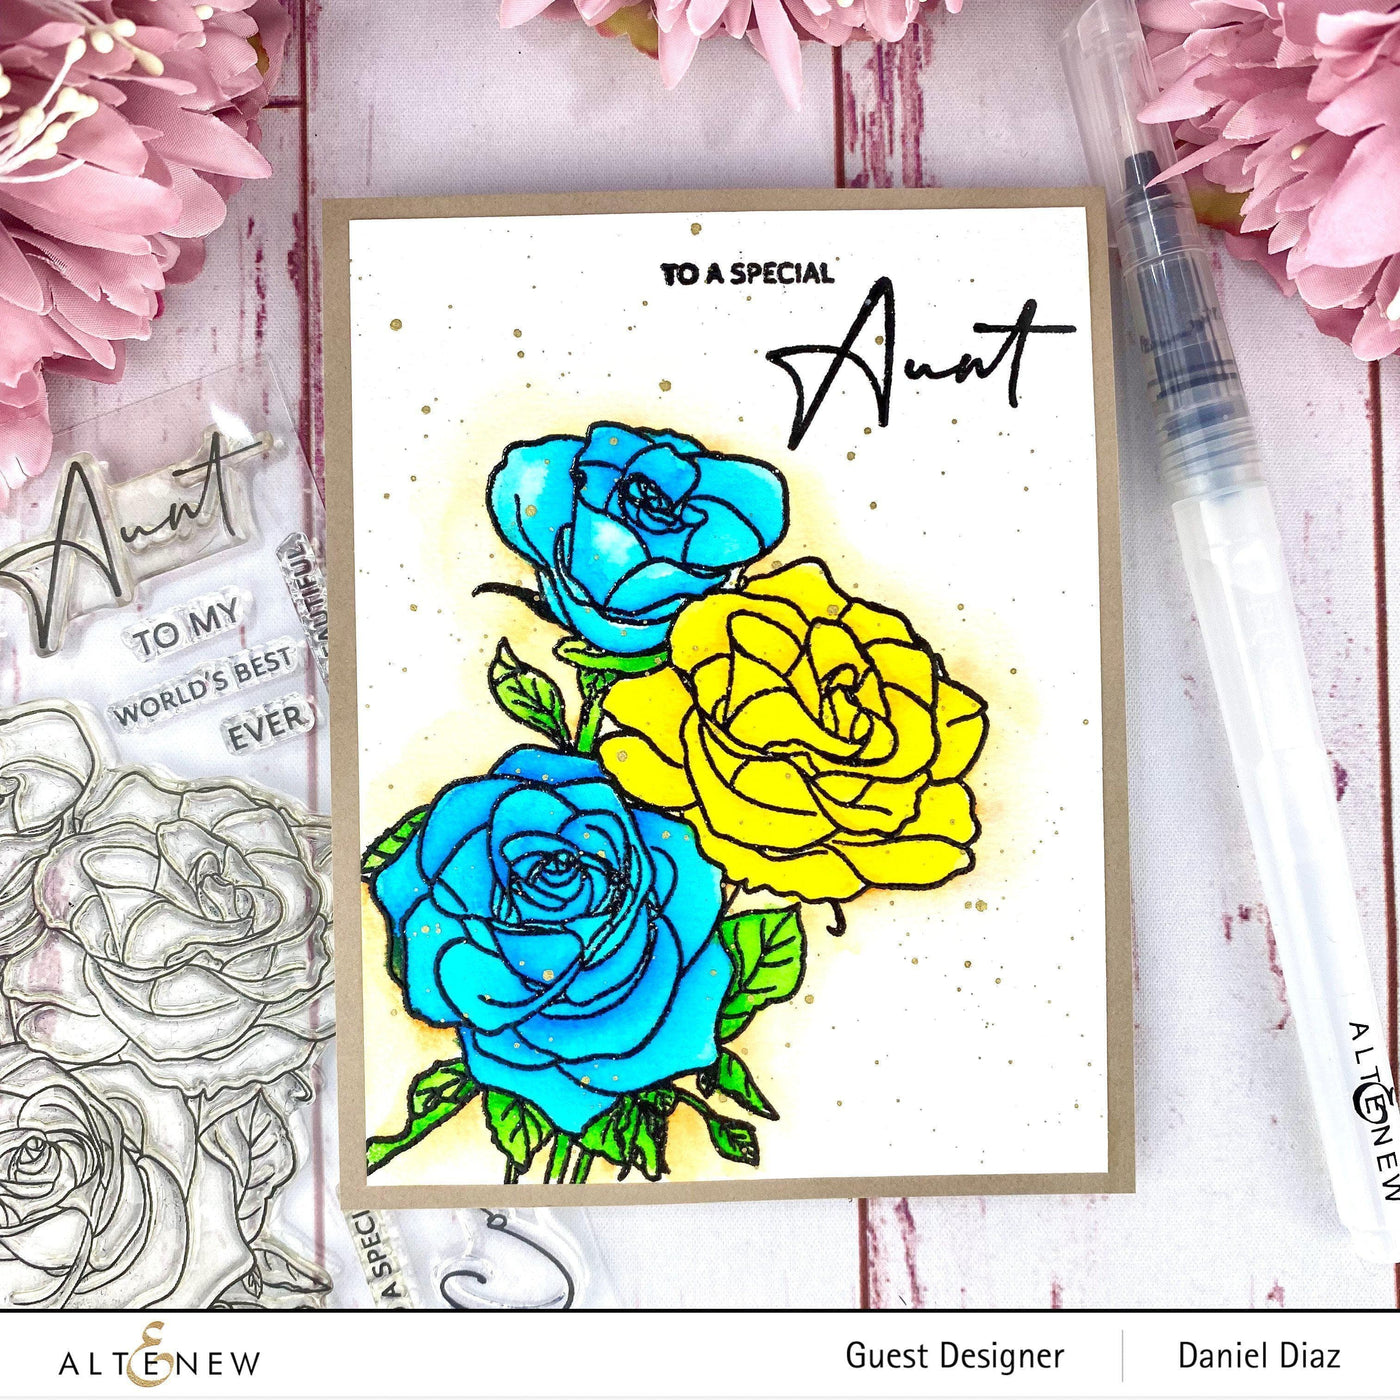 Photocentric Clear Stamps Paint-A-Flower: Rosa Floribunda Outline Stamp Set